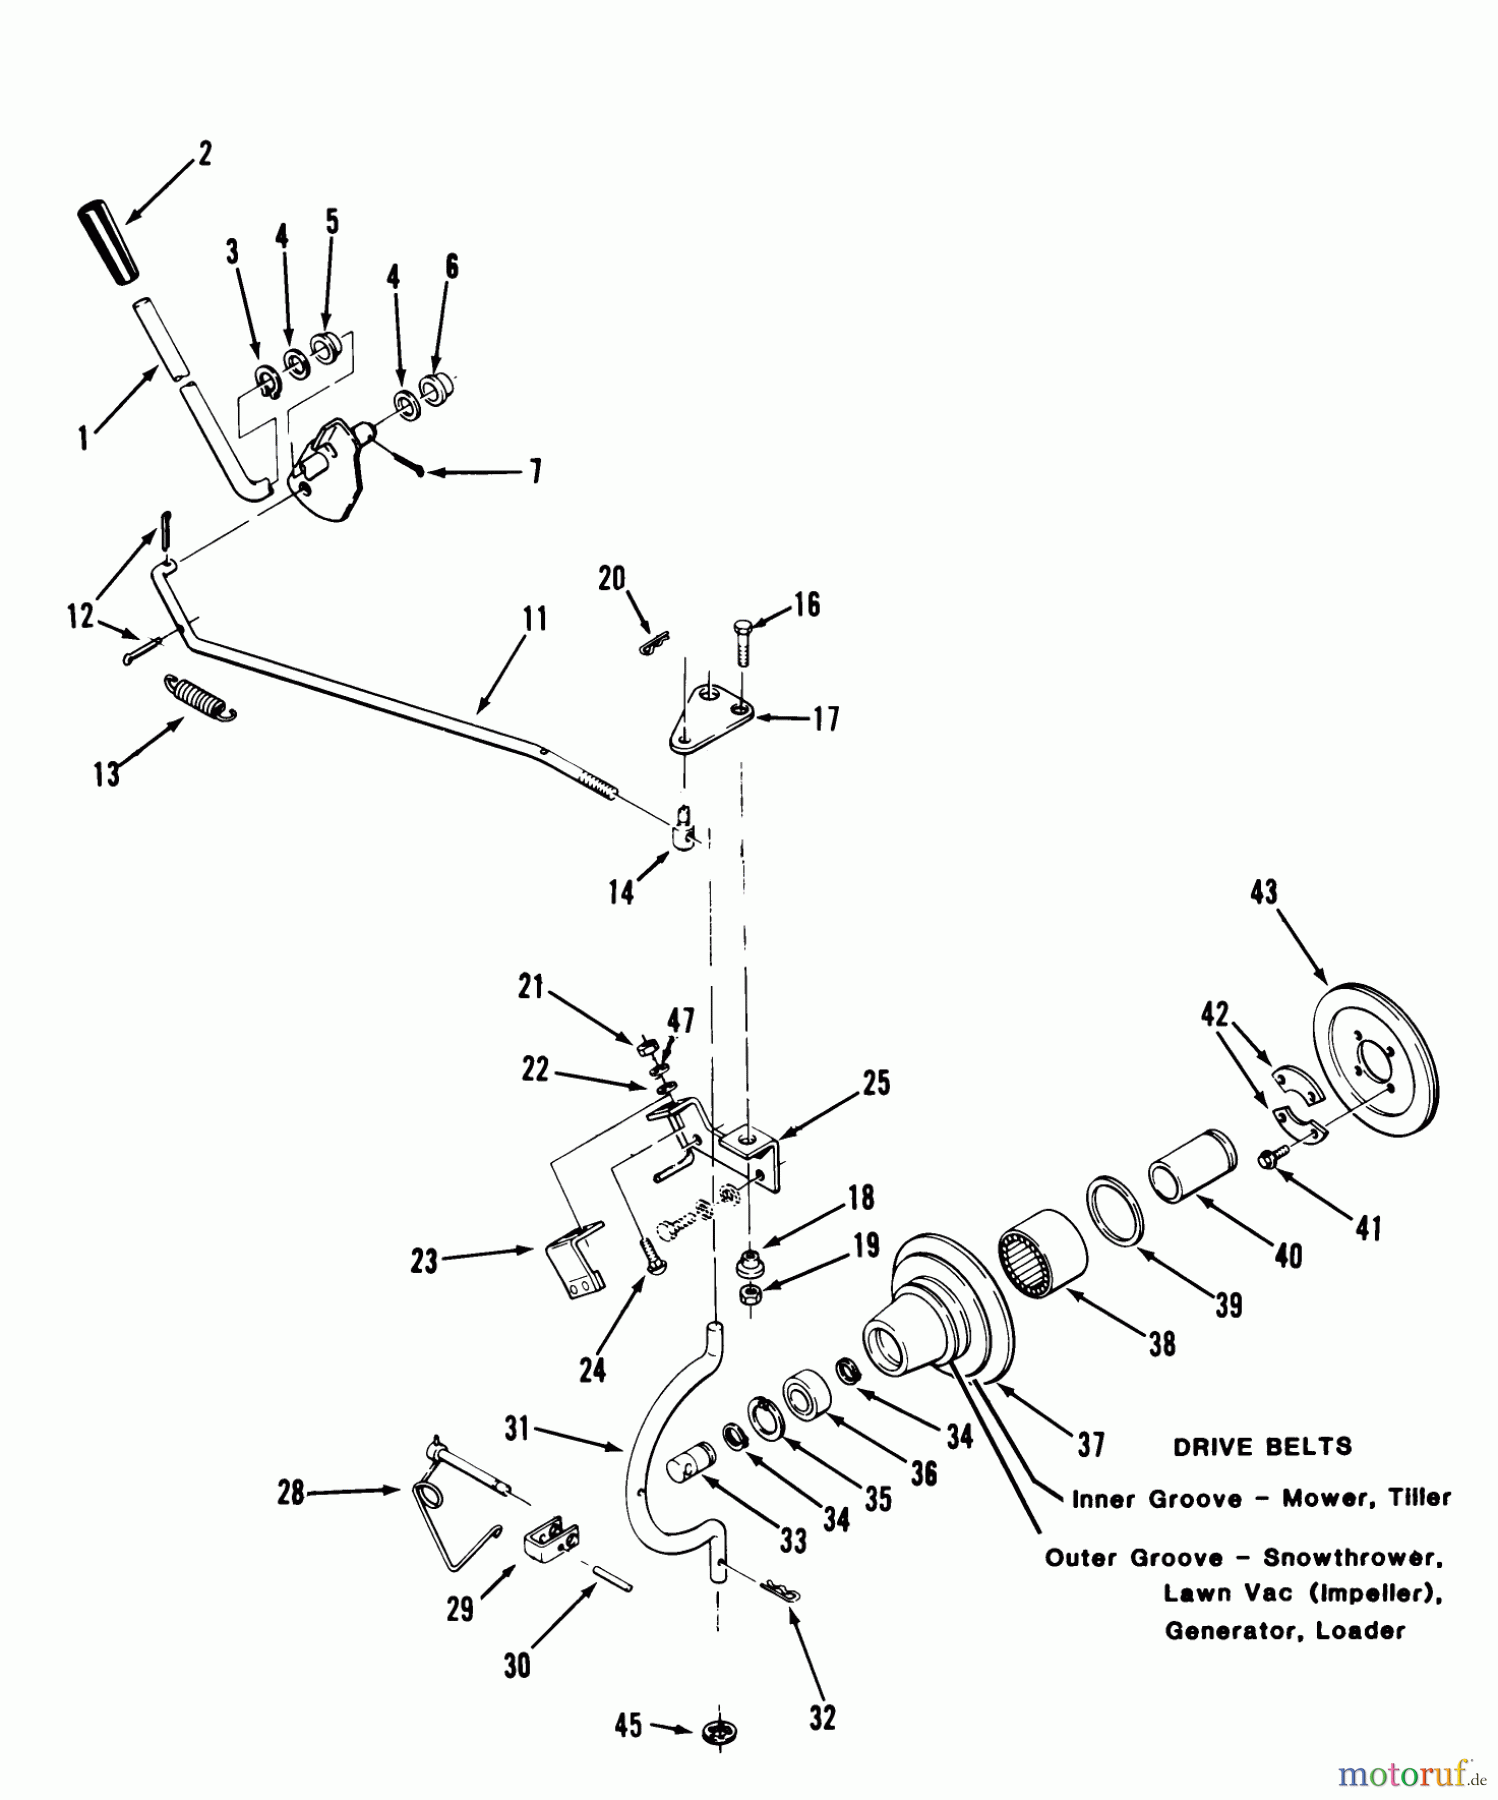  Toro Neu Mowers, Lawn & Garden Tractor Seite 2 C1-20OE02 (520-HC) - Toro 520-HC Garden Tractor, 1989 PTO CLUTCH AND CONTROL